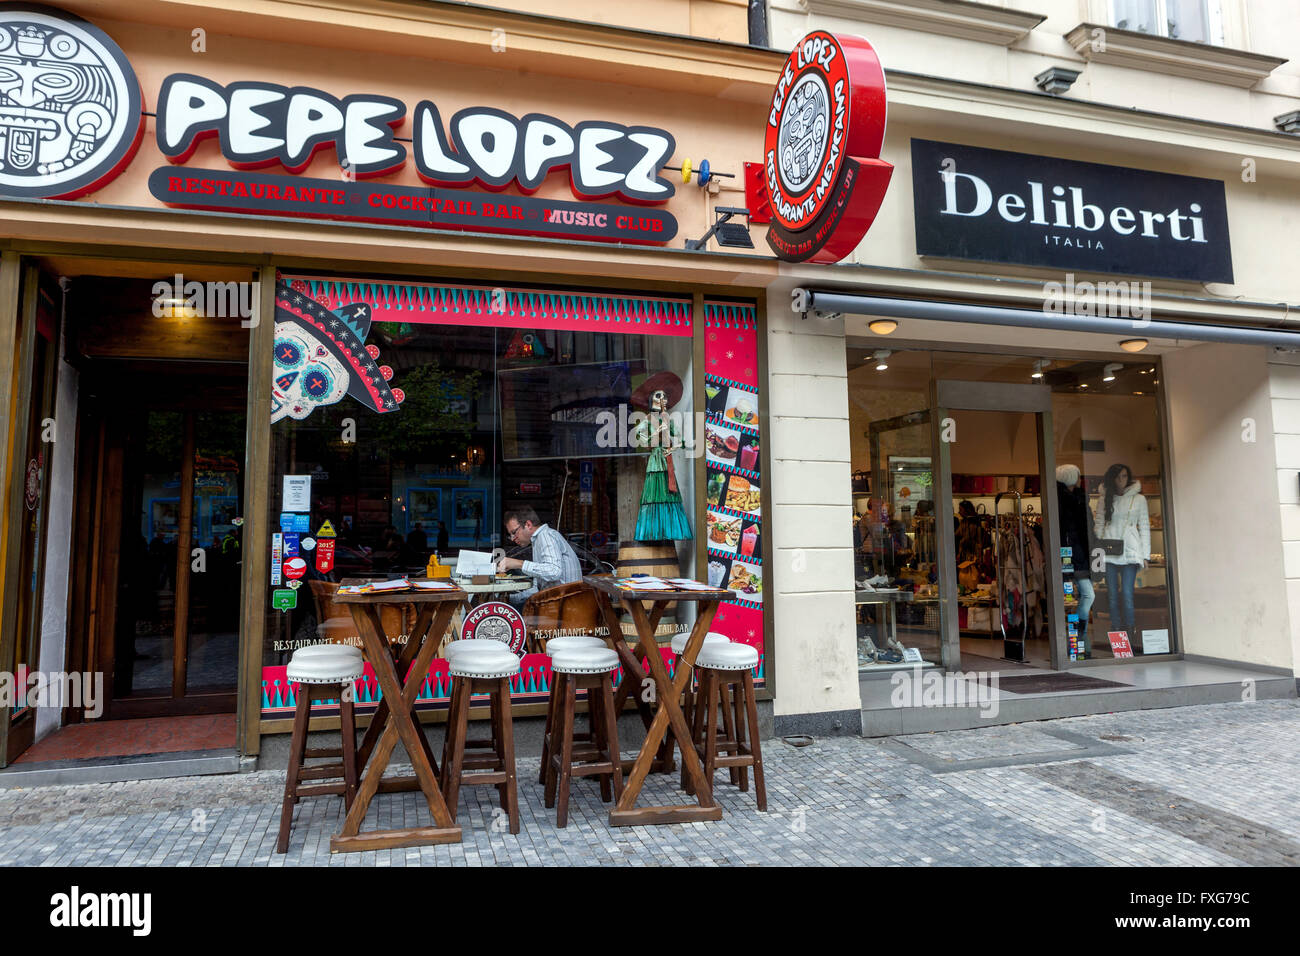 Restaurant Pepe Lopez und Deliberti Mode Shop, Straße Na Prikope, Prag, Tschechische Republik Stockfoto